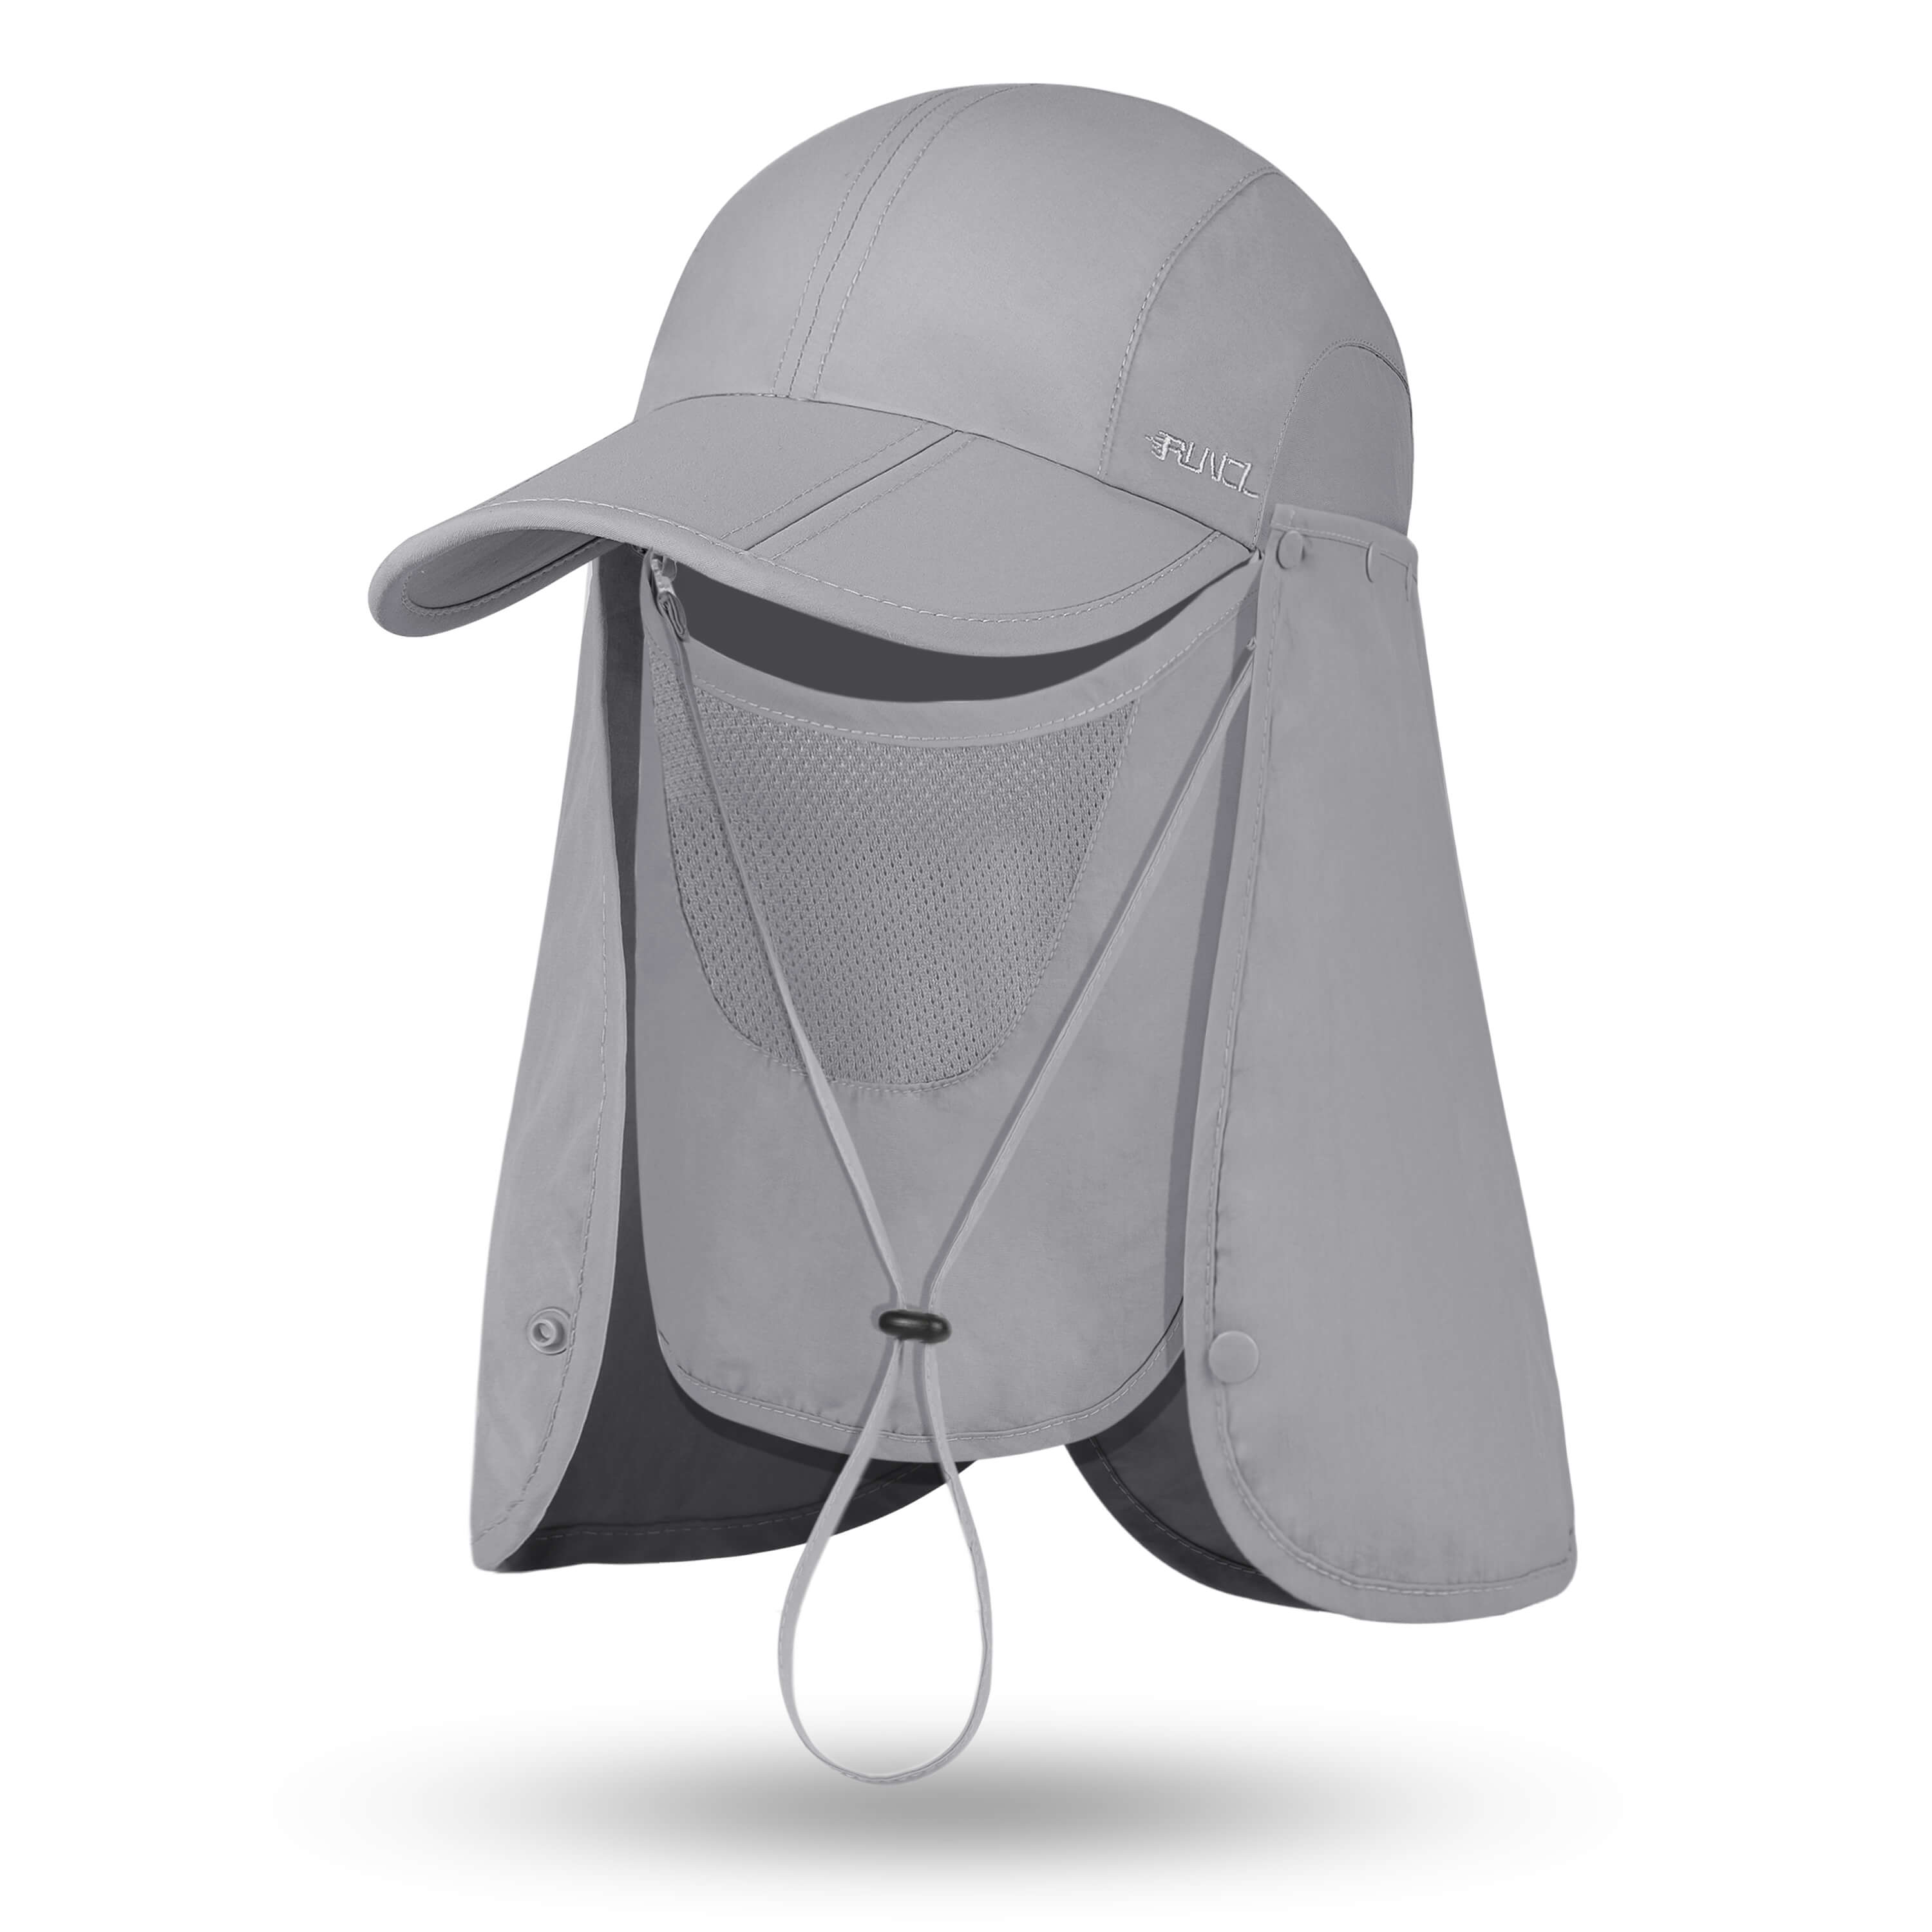 RUNCL UV Sun Protection Hat - Gray